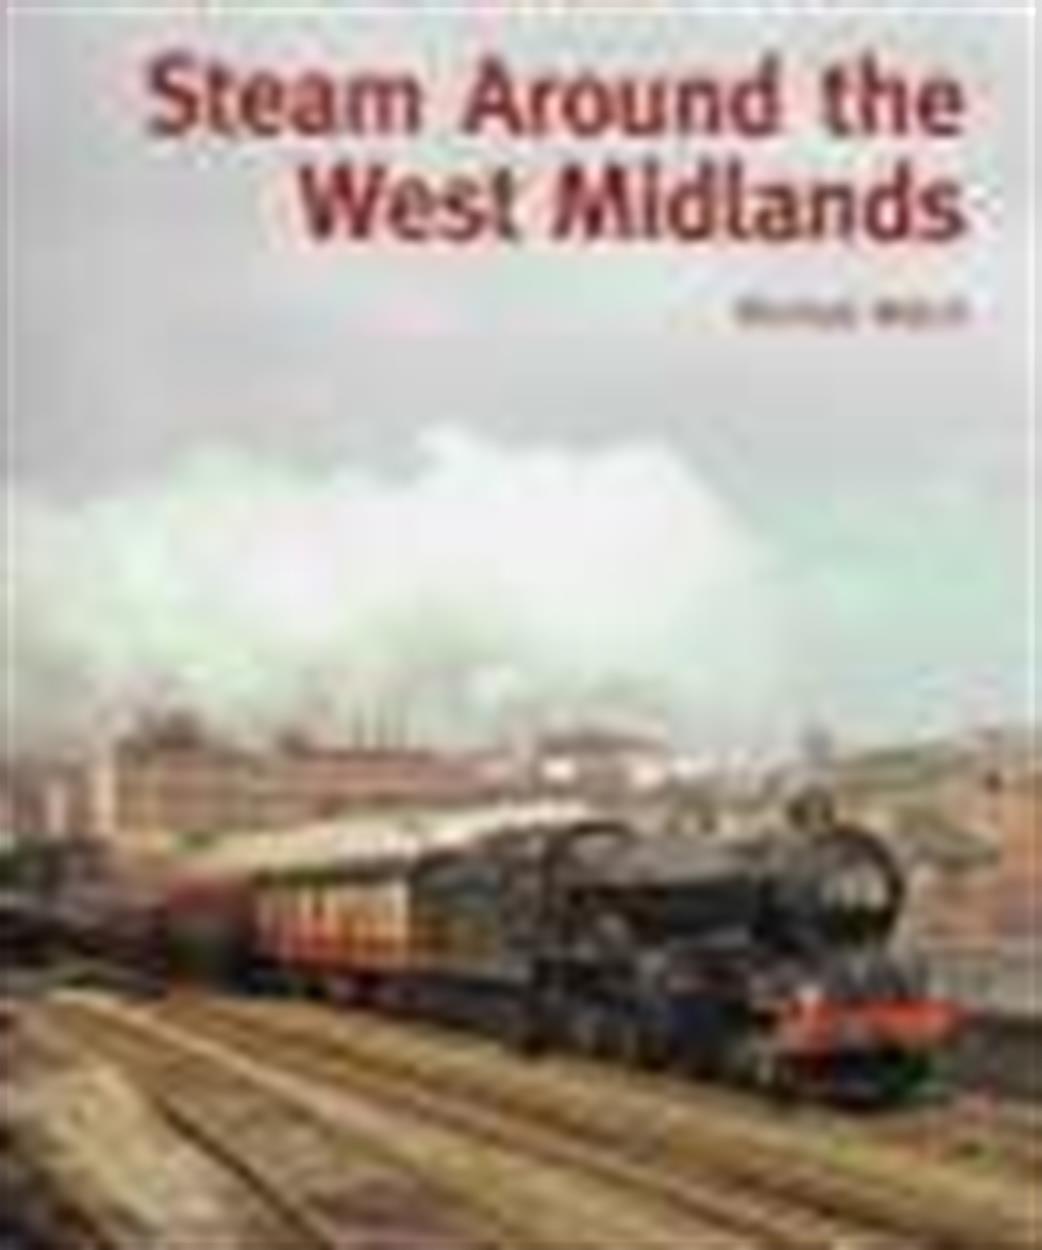 9781854143938 Steam Around the West Midlands by Michael Welsh